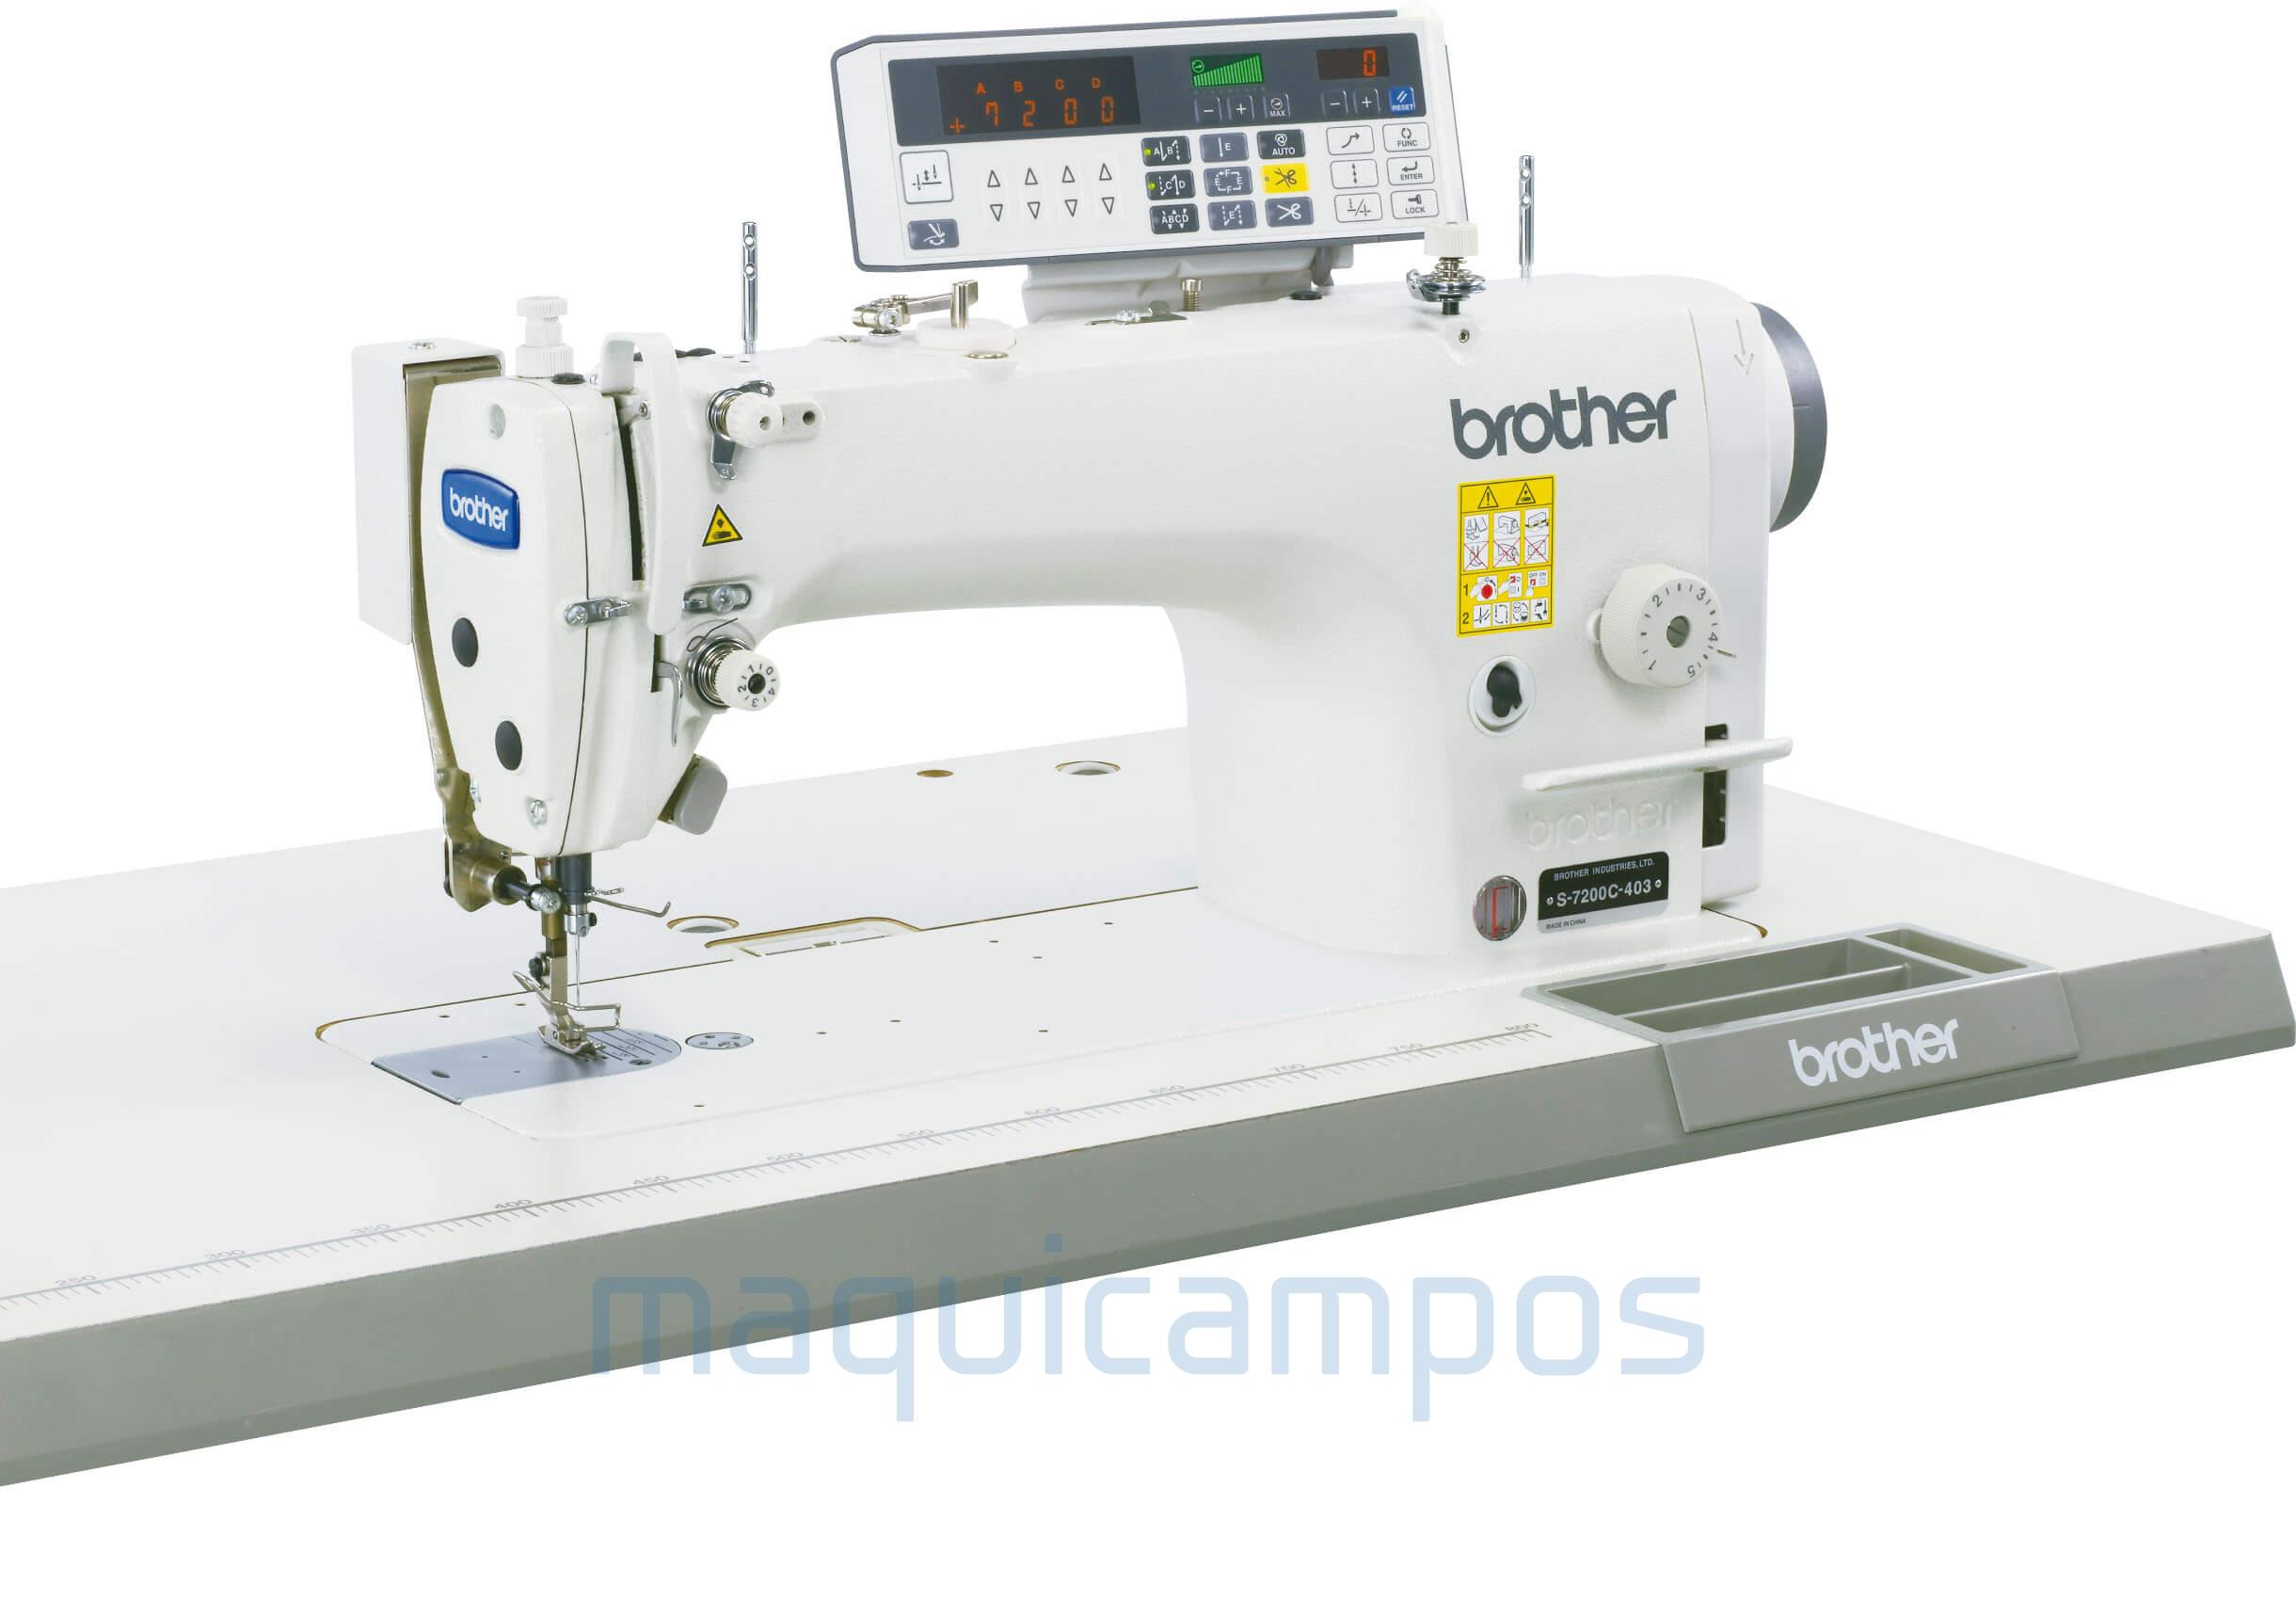 Brother S-7200C-403 Lockstitch Sewing Machine